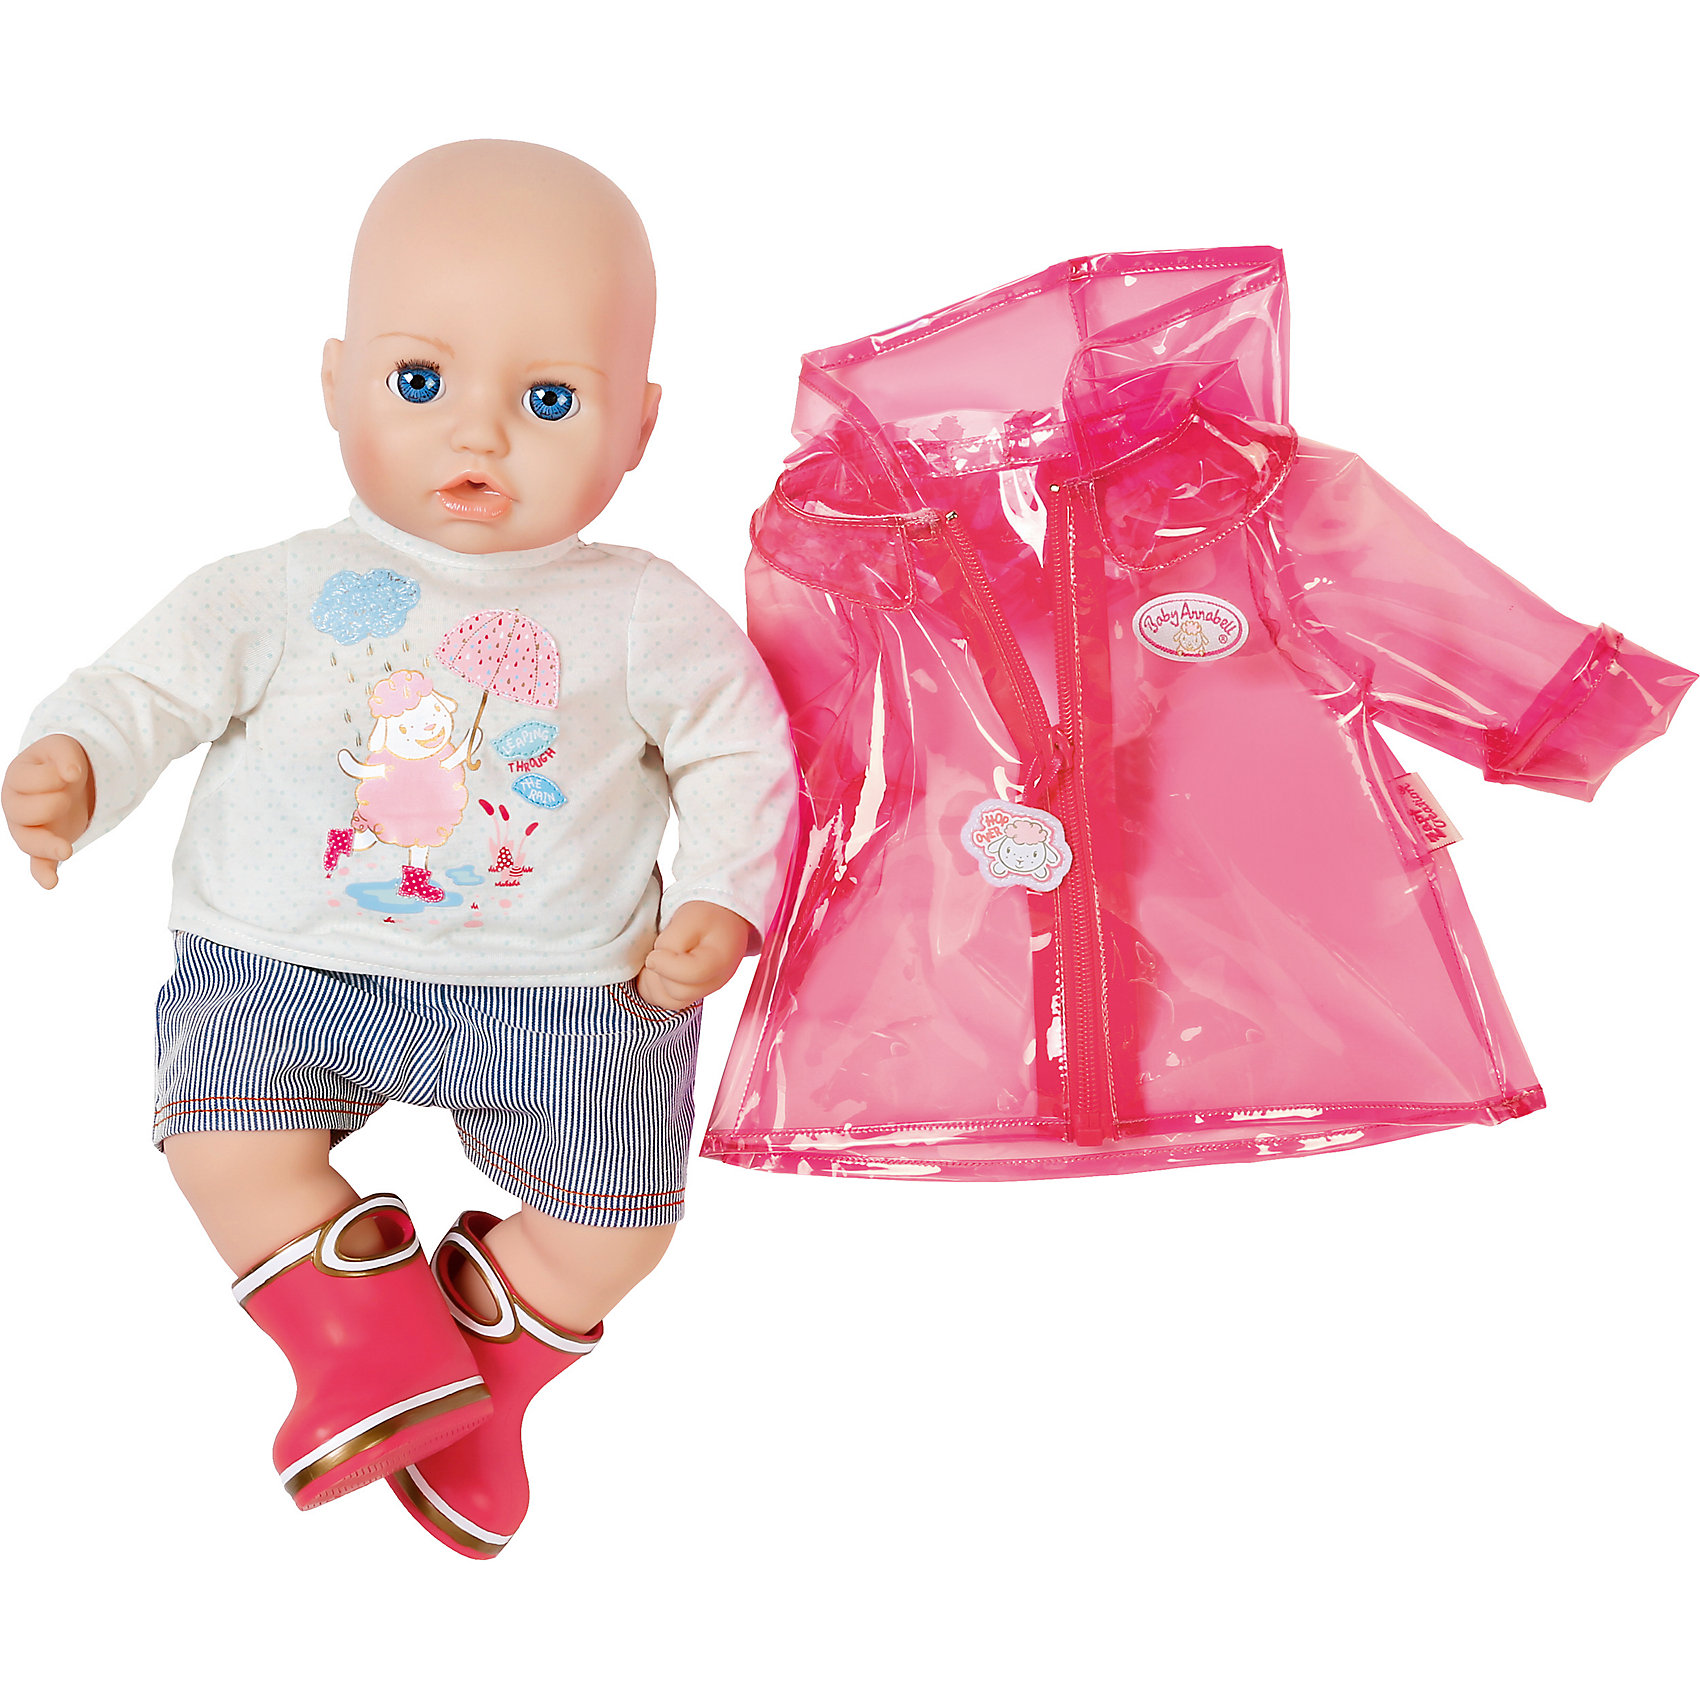 Zapf Creation комплект одежды для дождливой погоды для куклы Baby Annabell 700808